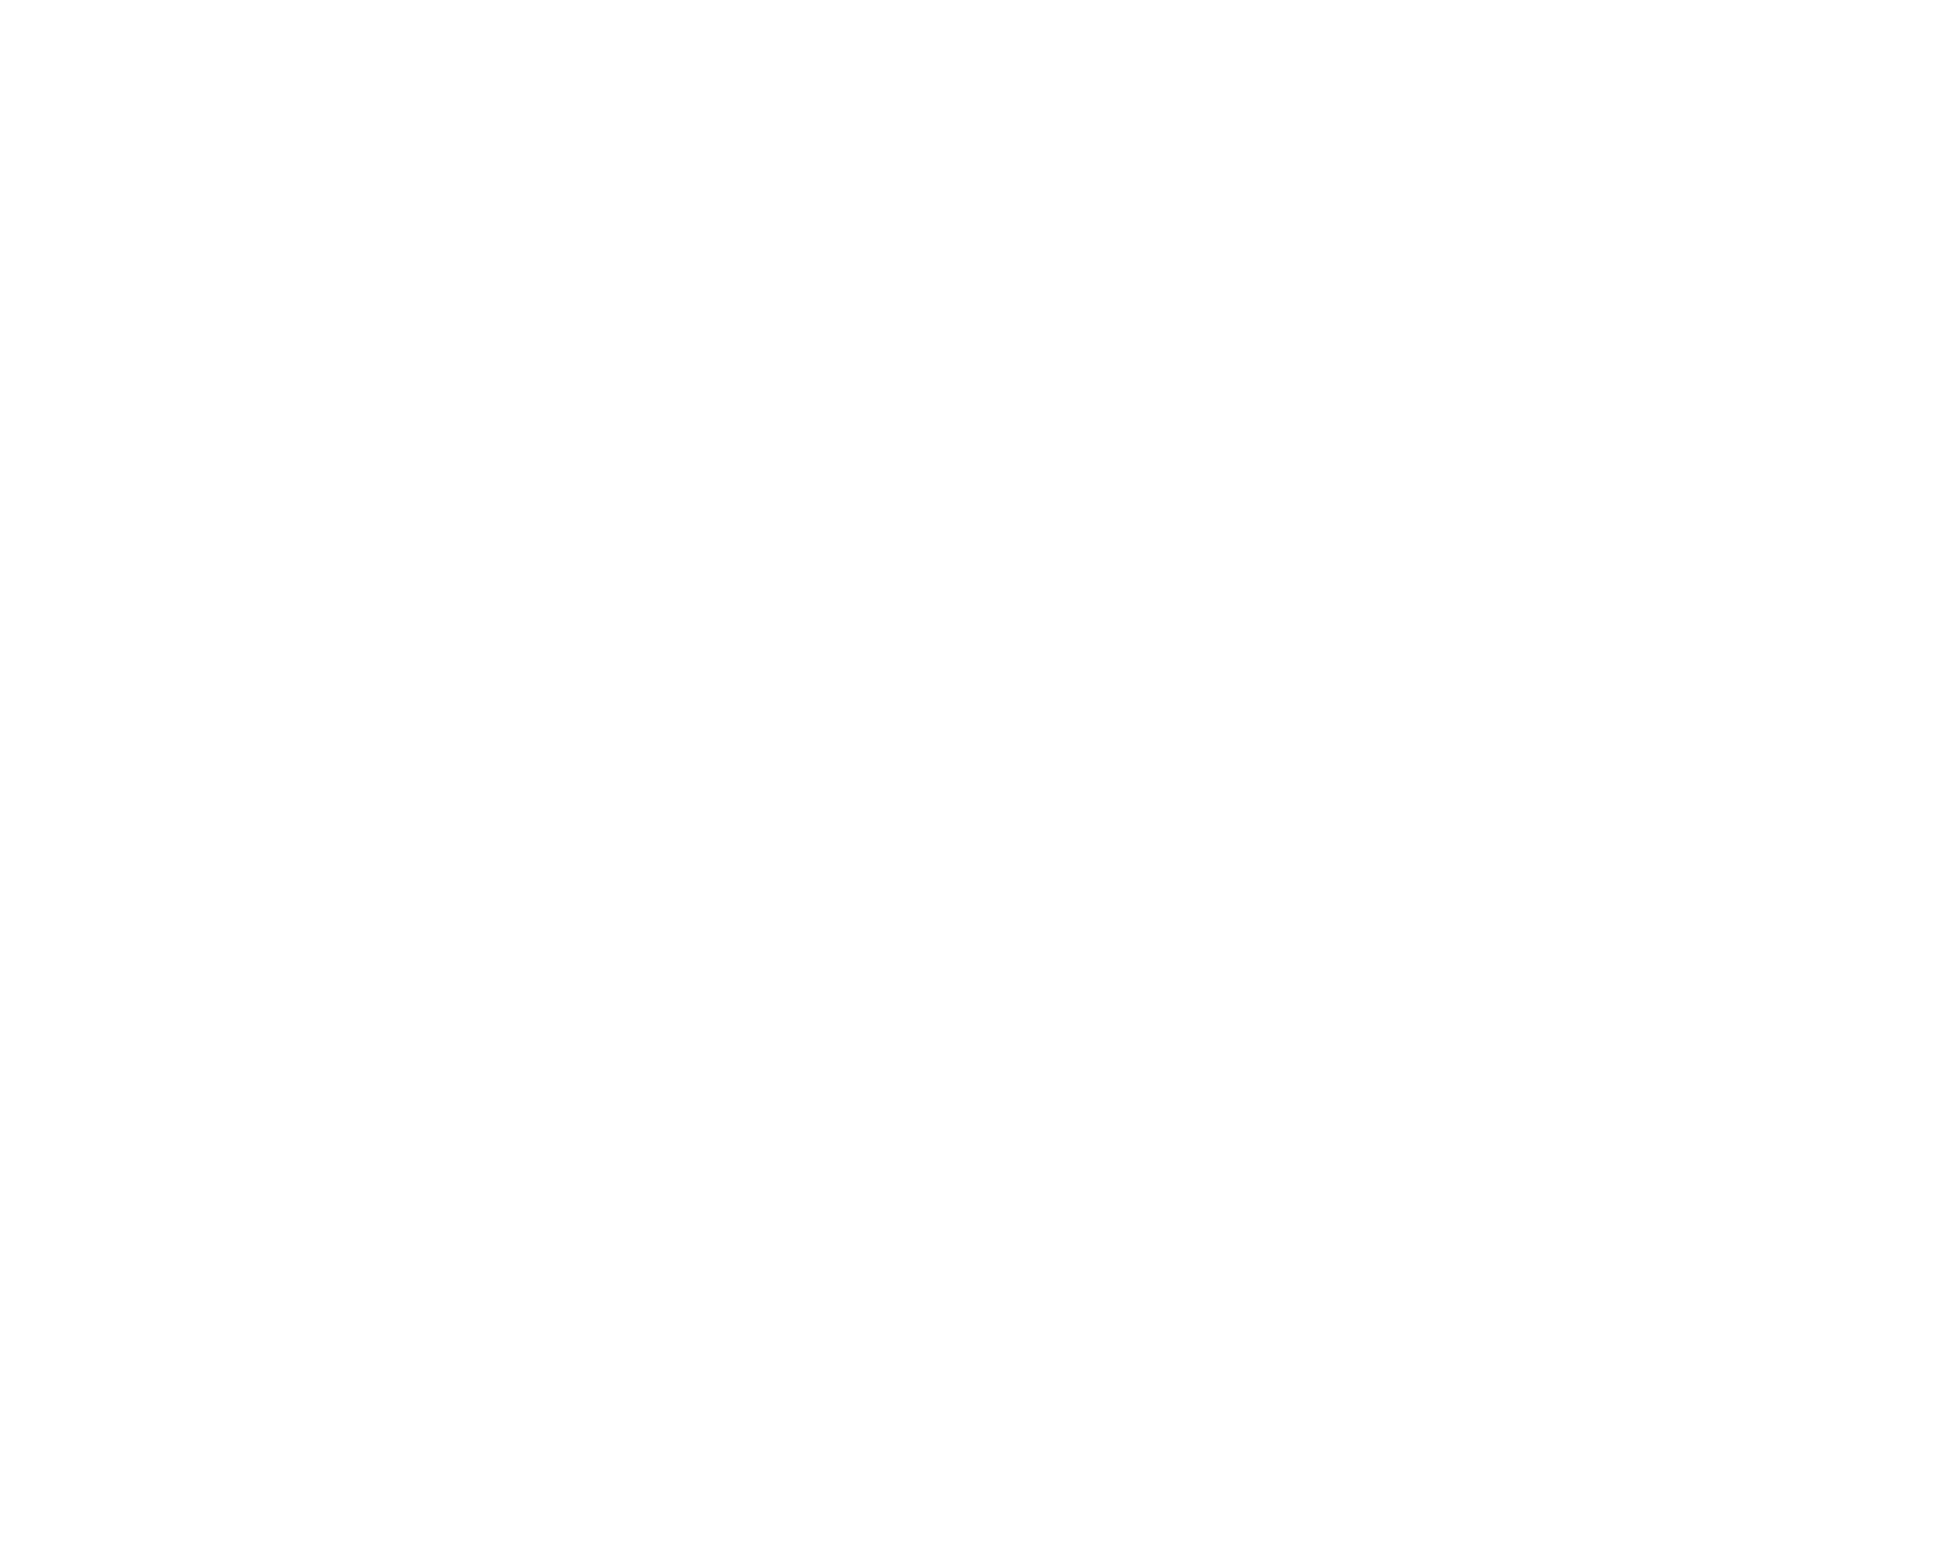 KSC Bensheim e.V.